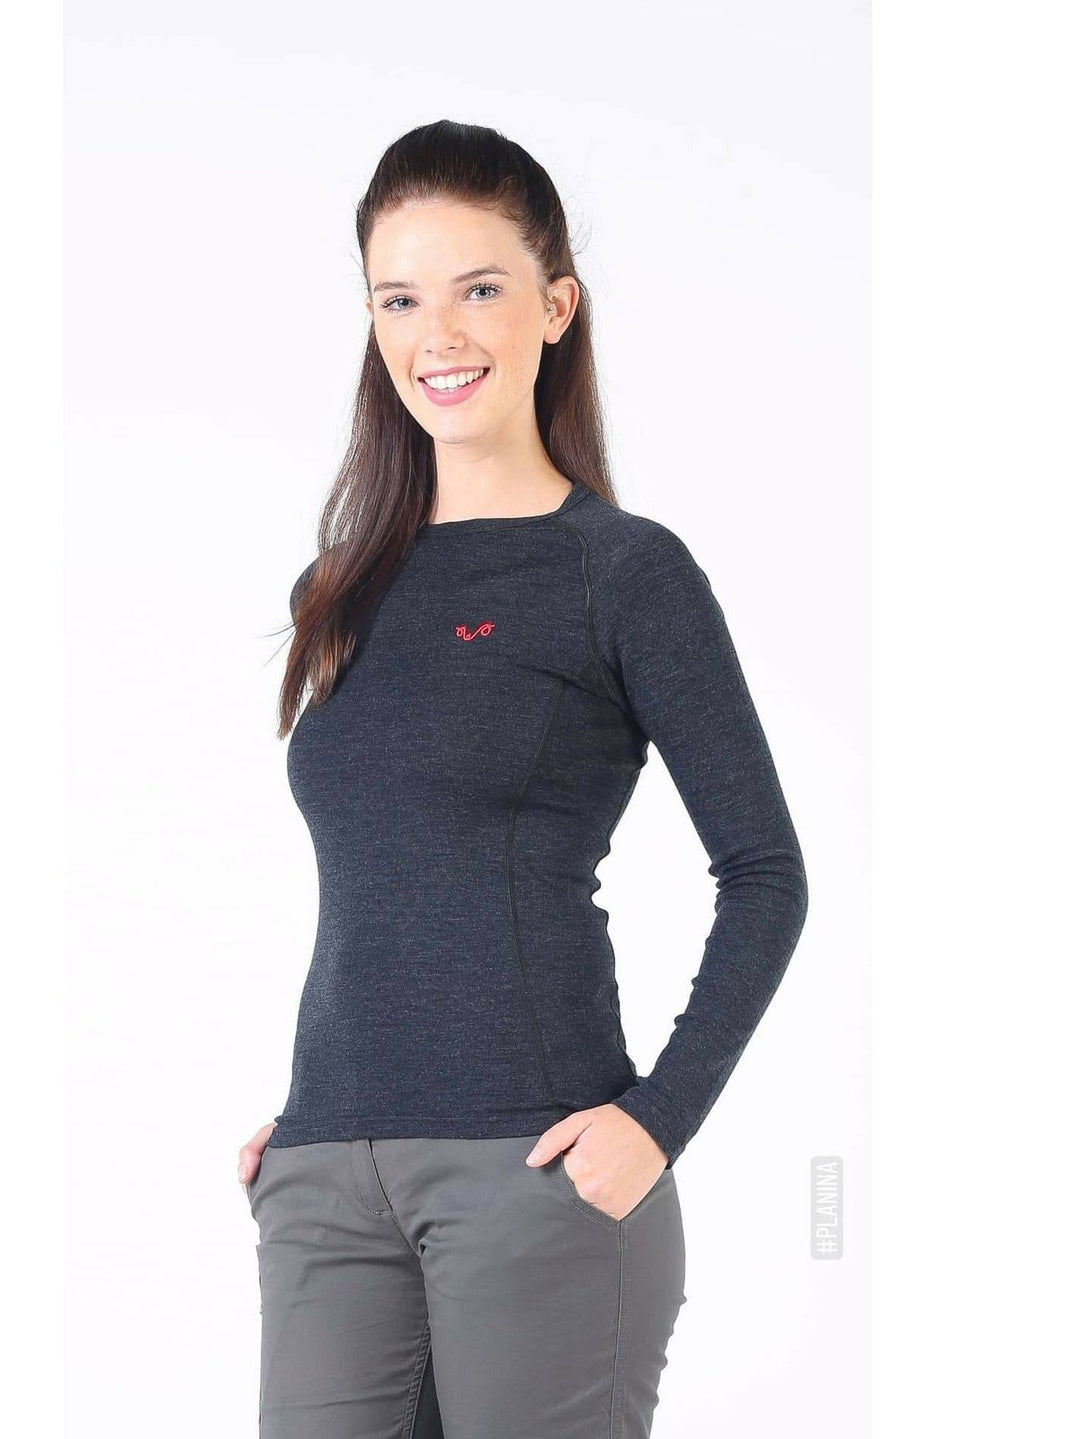 ALIZE- Aktivni veš 100% merino vuna ženska bluza